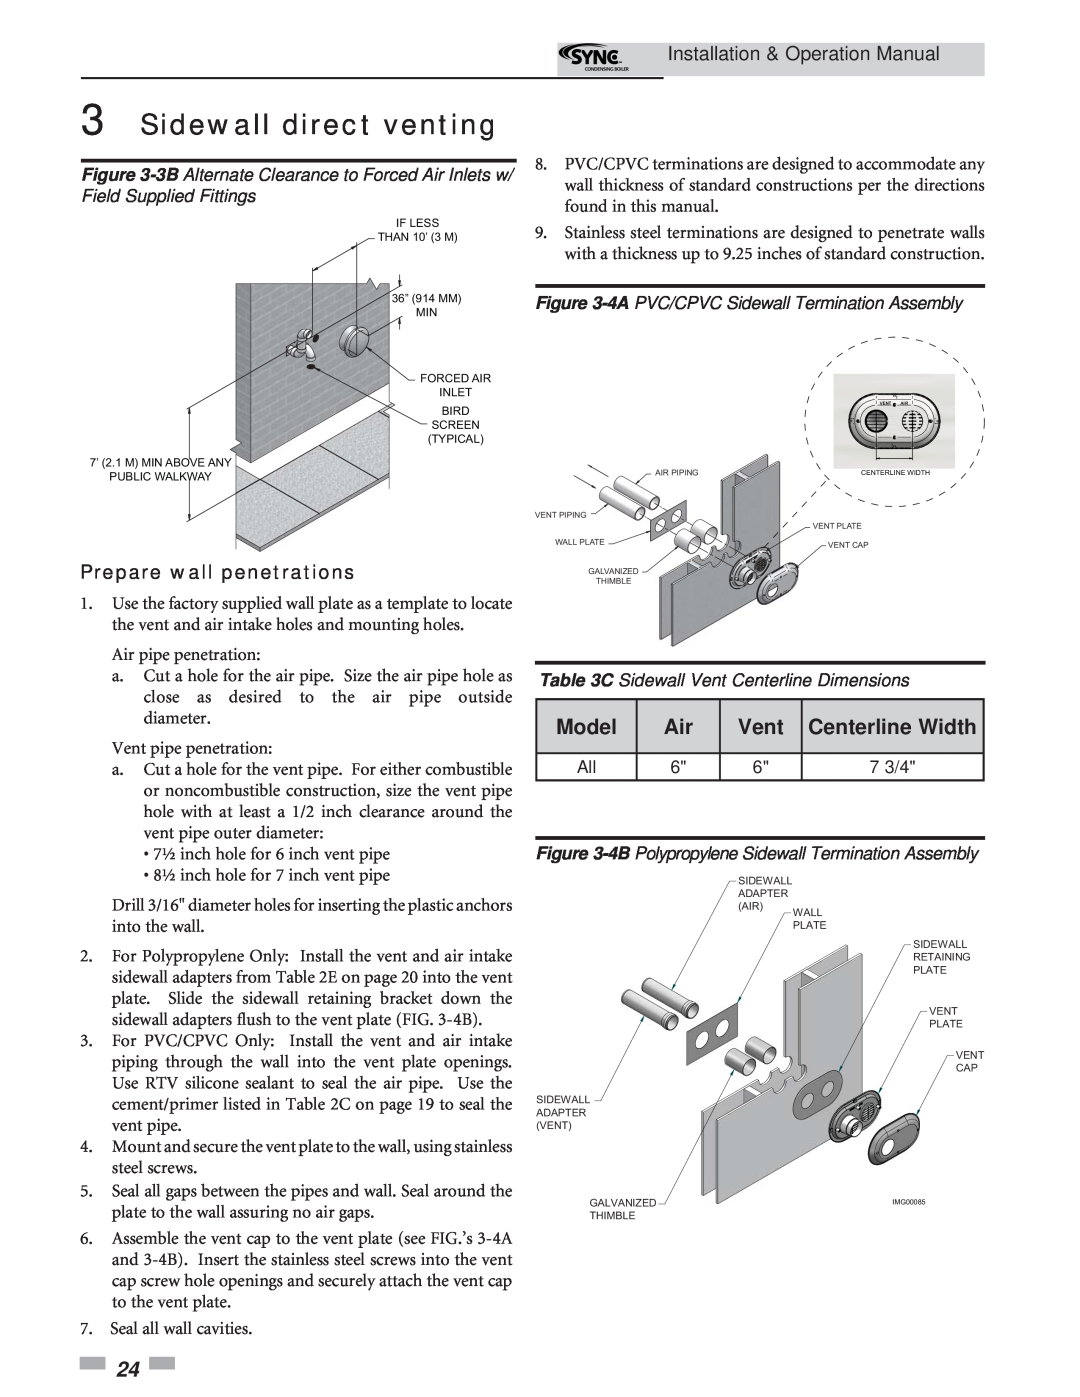 Lochinvar 5 operation manual Centerline Width, Prepare wall penetrations, C Sidewall Vent Centerline Dimensions, Model 